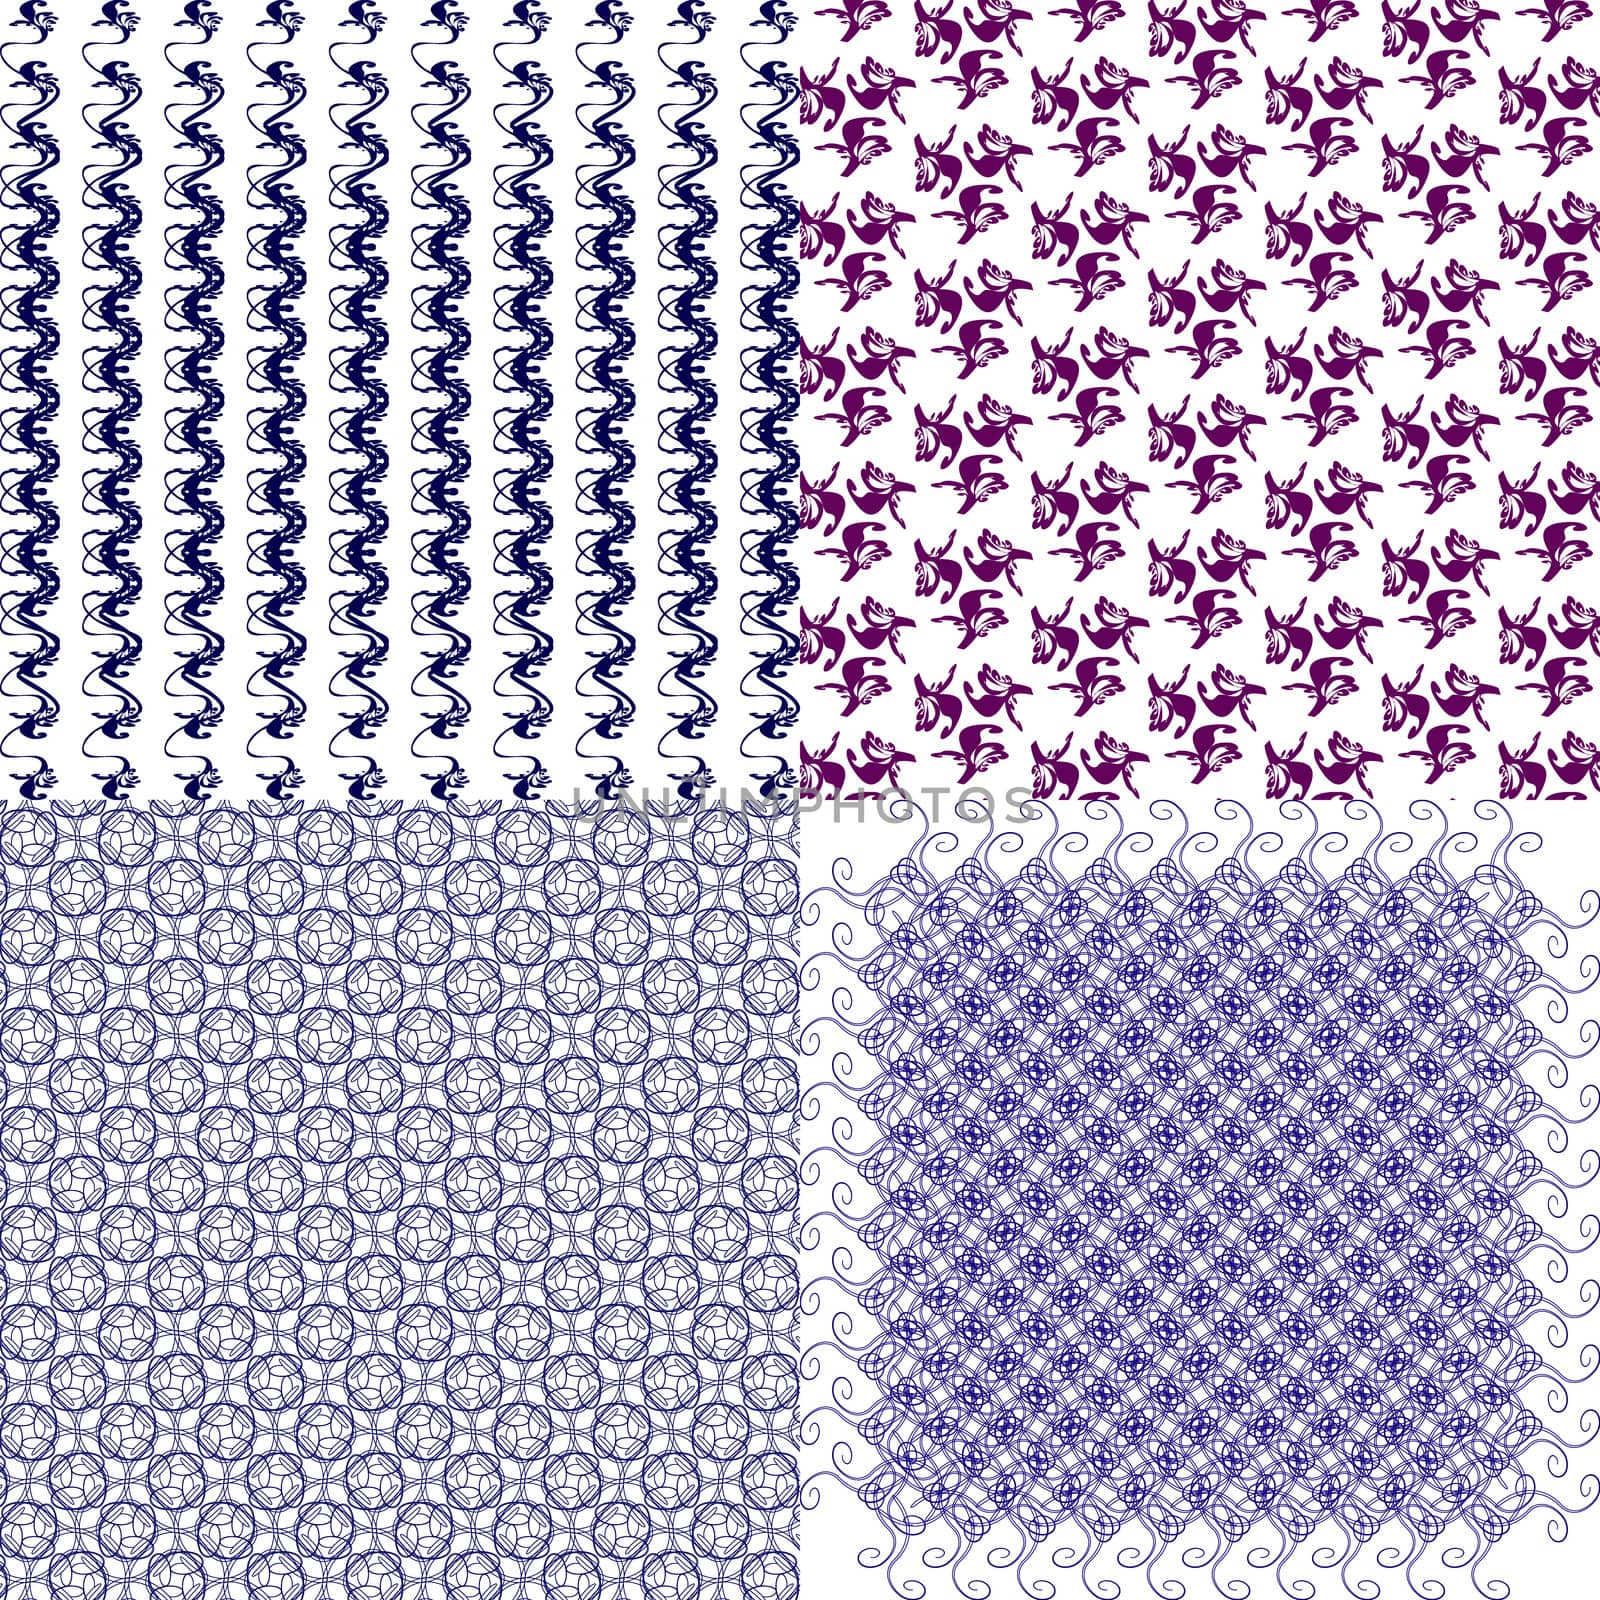 4 Geometric patterns, tiling. Set of  abstract vintage backgrounds.  illustration